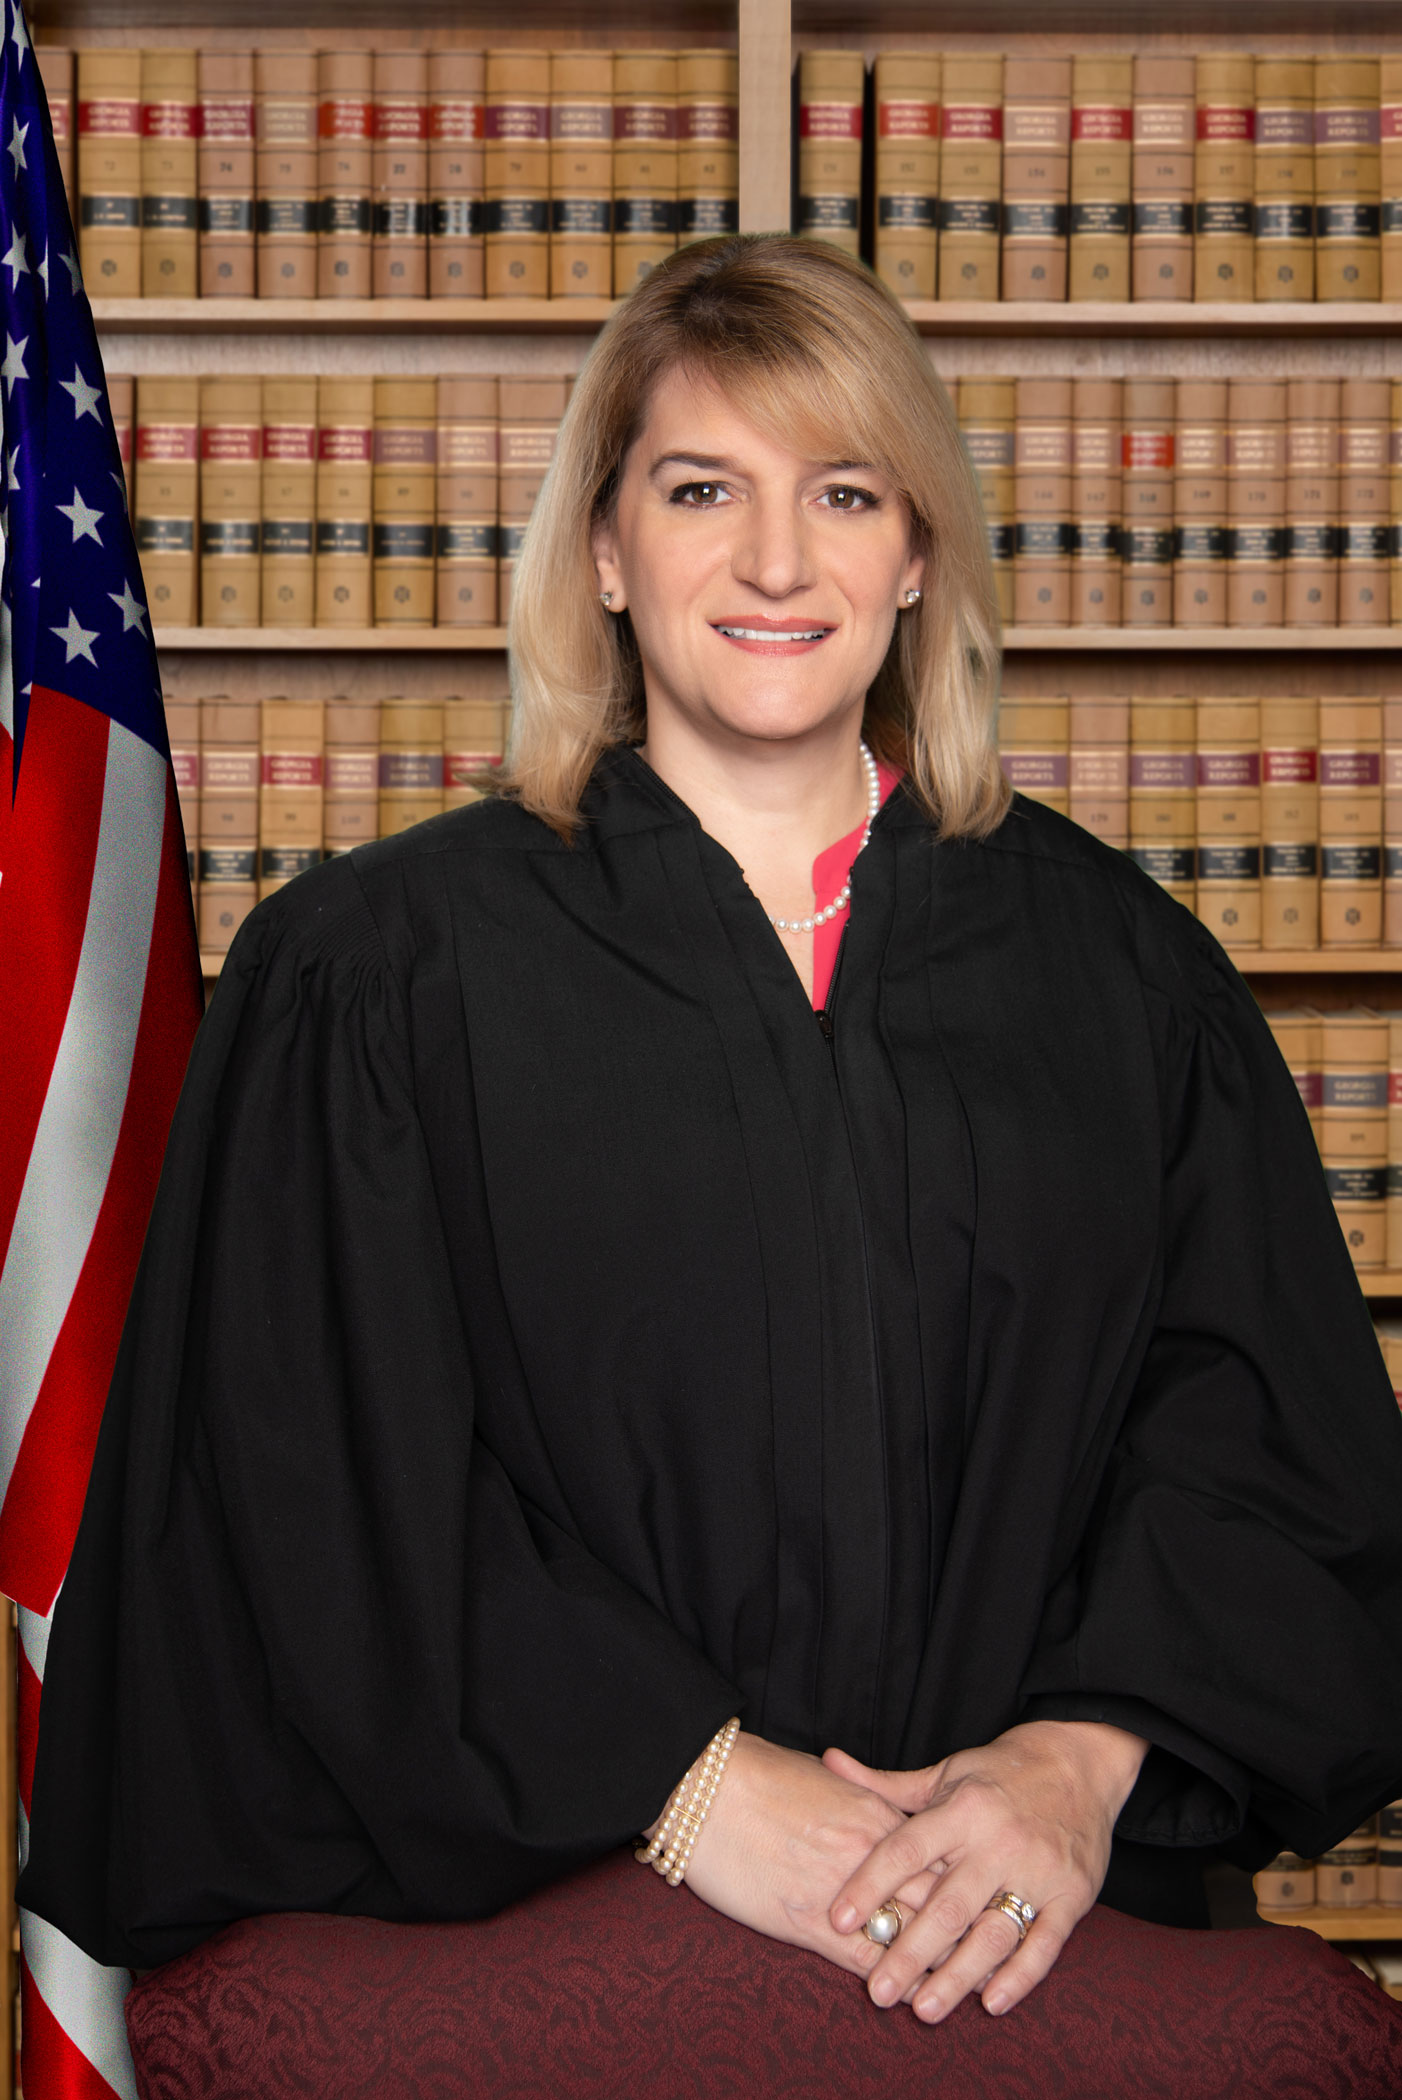 Judge Rachel R. Krause